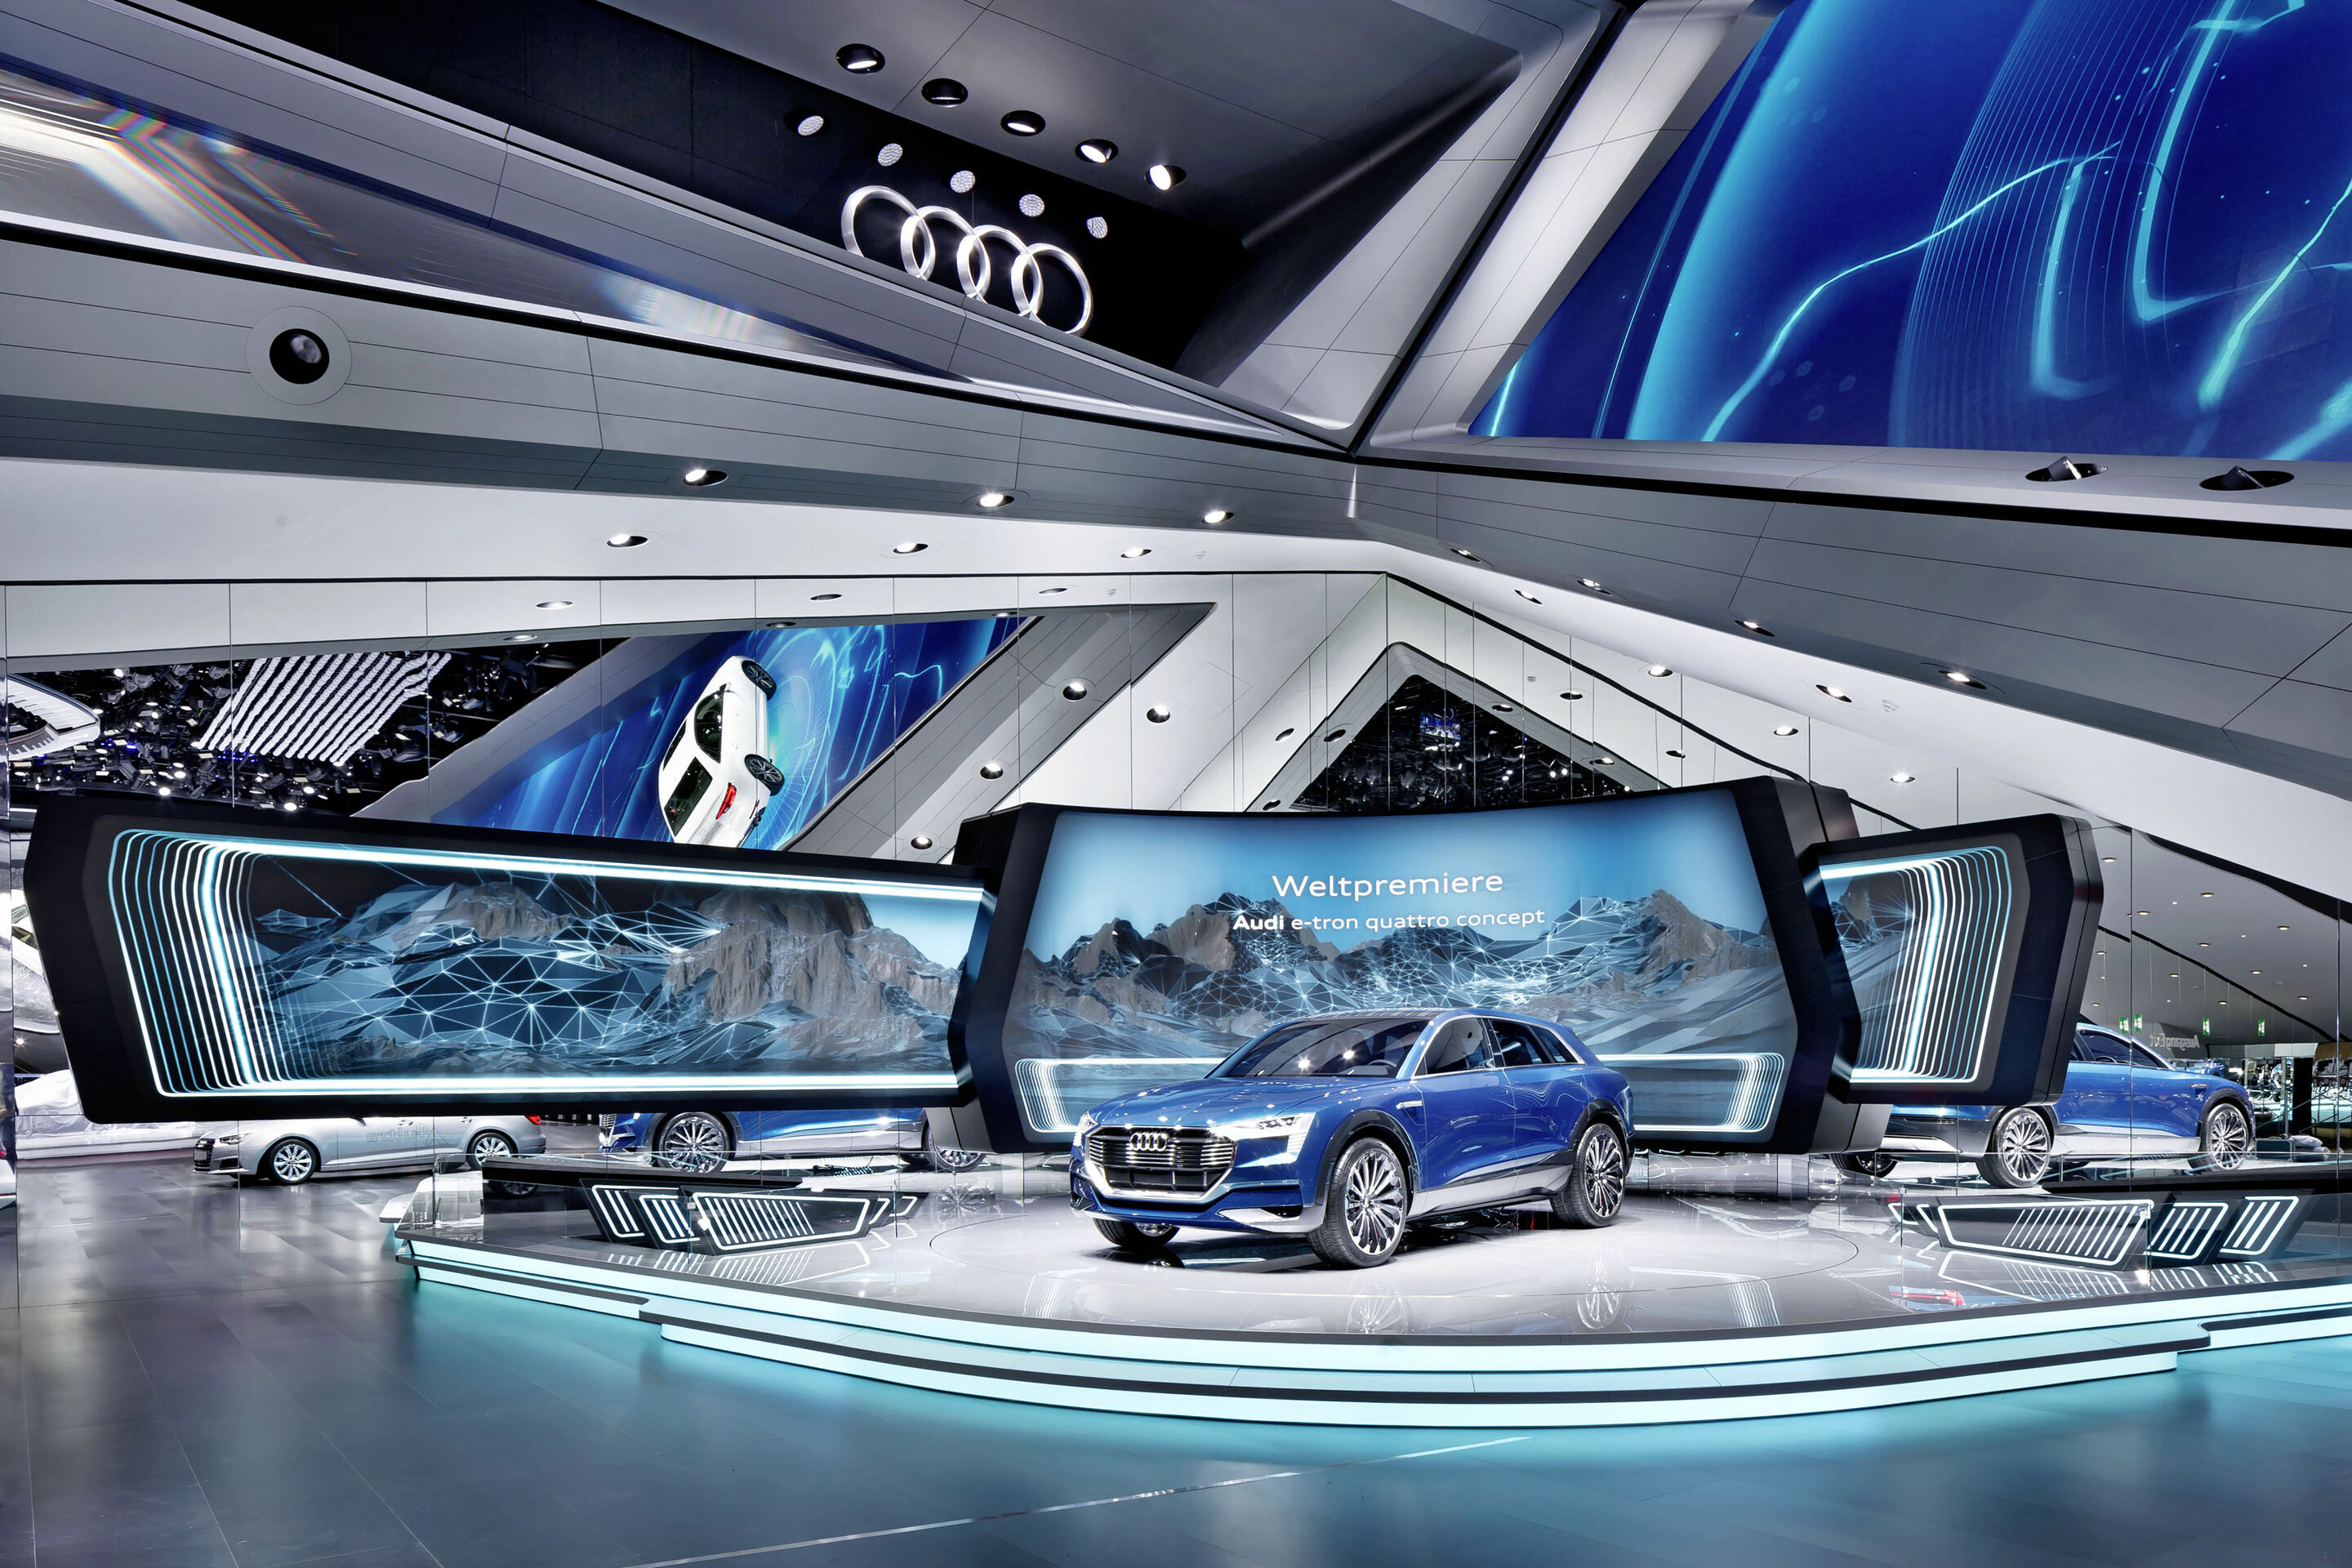 Audi booth at the Frankfurt International Motor Show 2015